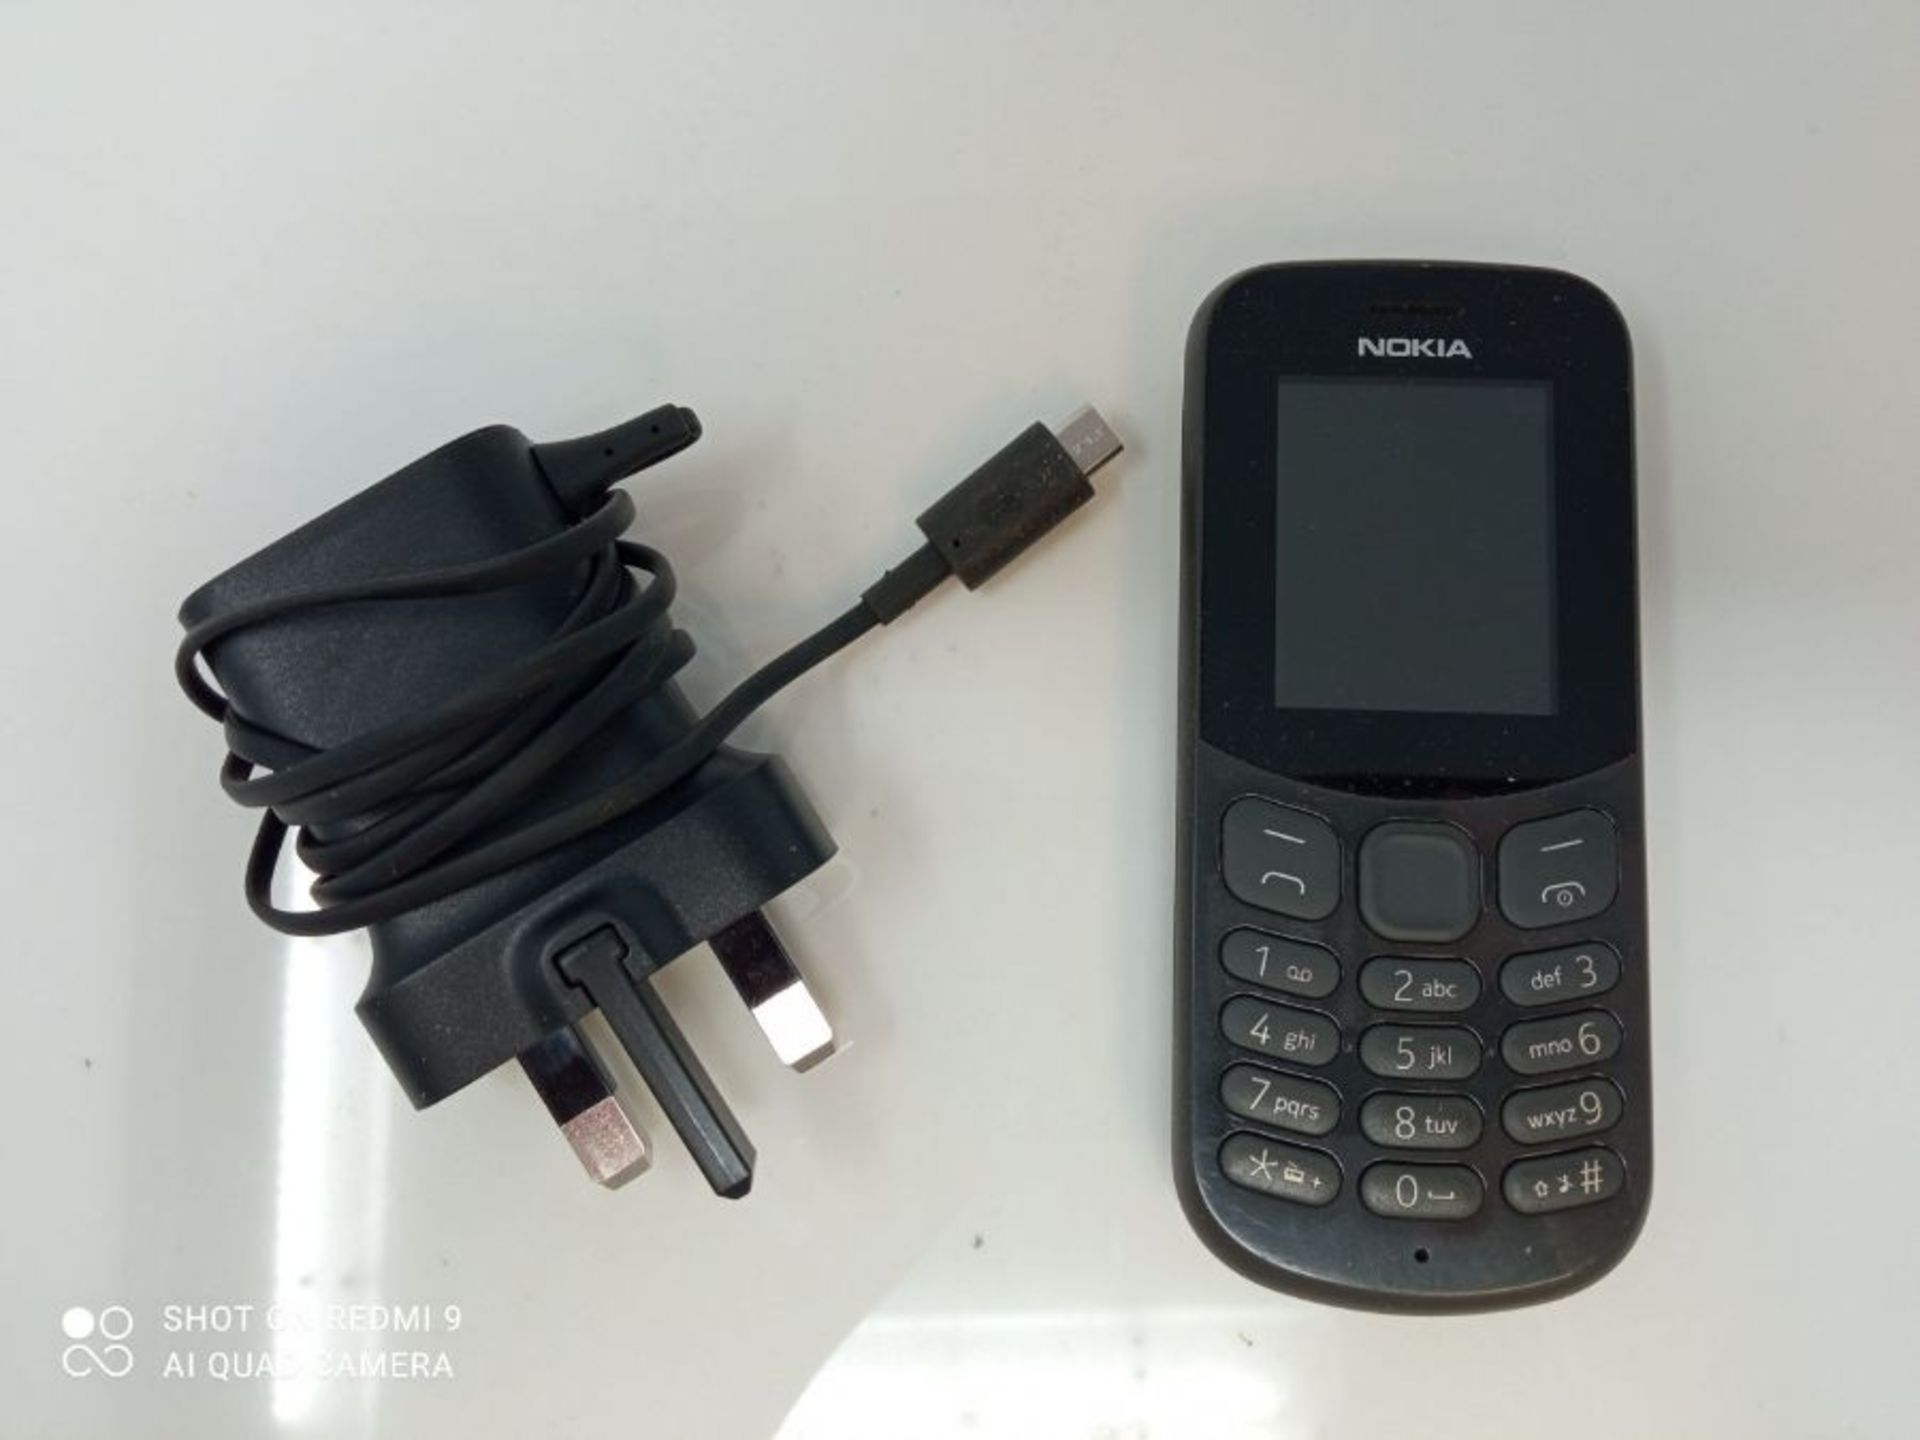 Nokia 130 SIM-Free Mobile Phone (2017 Edition) - Black - Image 2 of 3